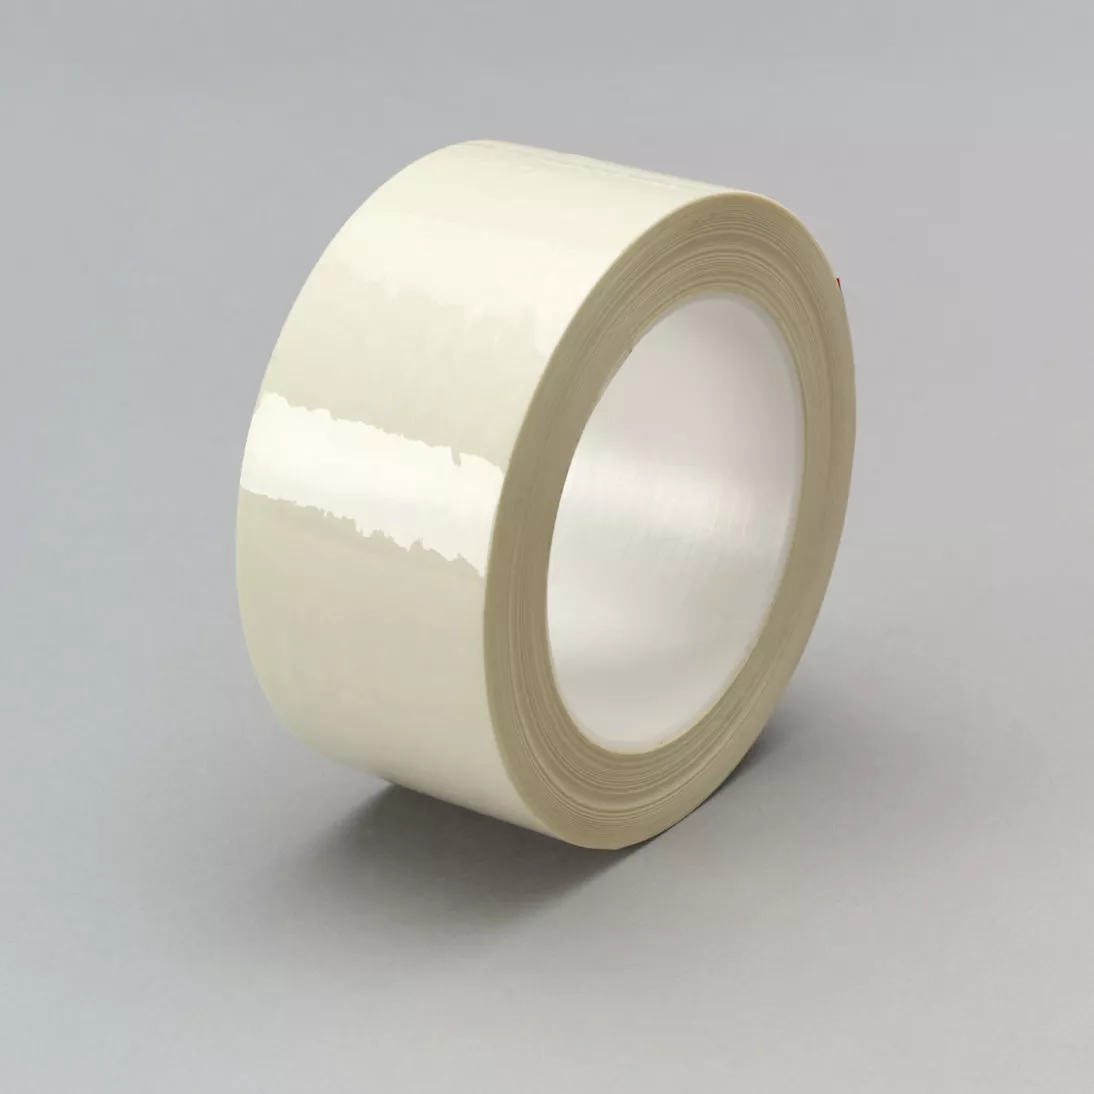 3M™ High Temperature Nylon Film Tape 855, White, 3/4 in x 72 yd, 3.6
mil, 48 rolls per case